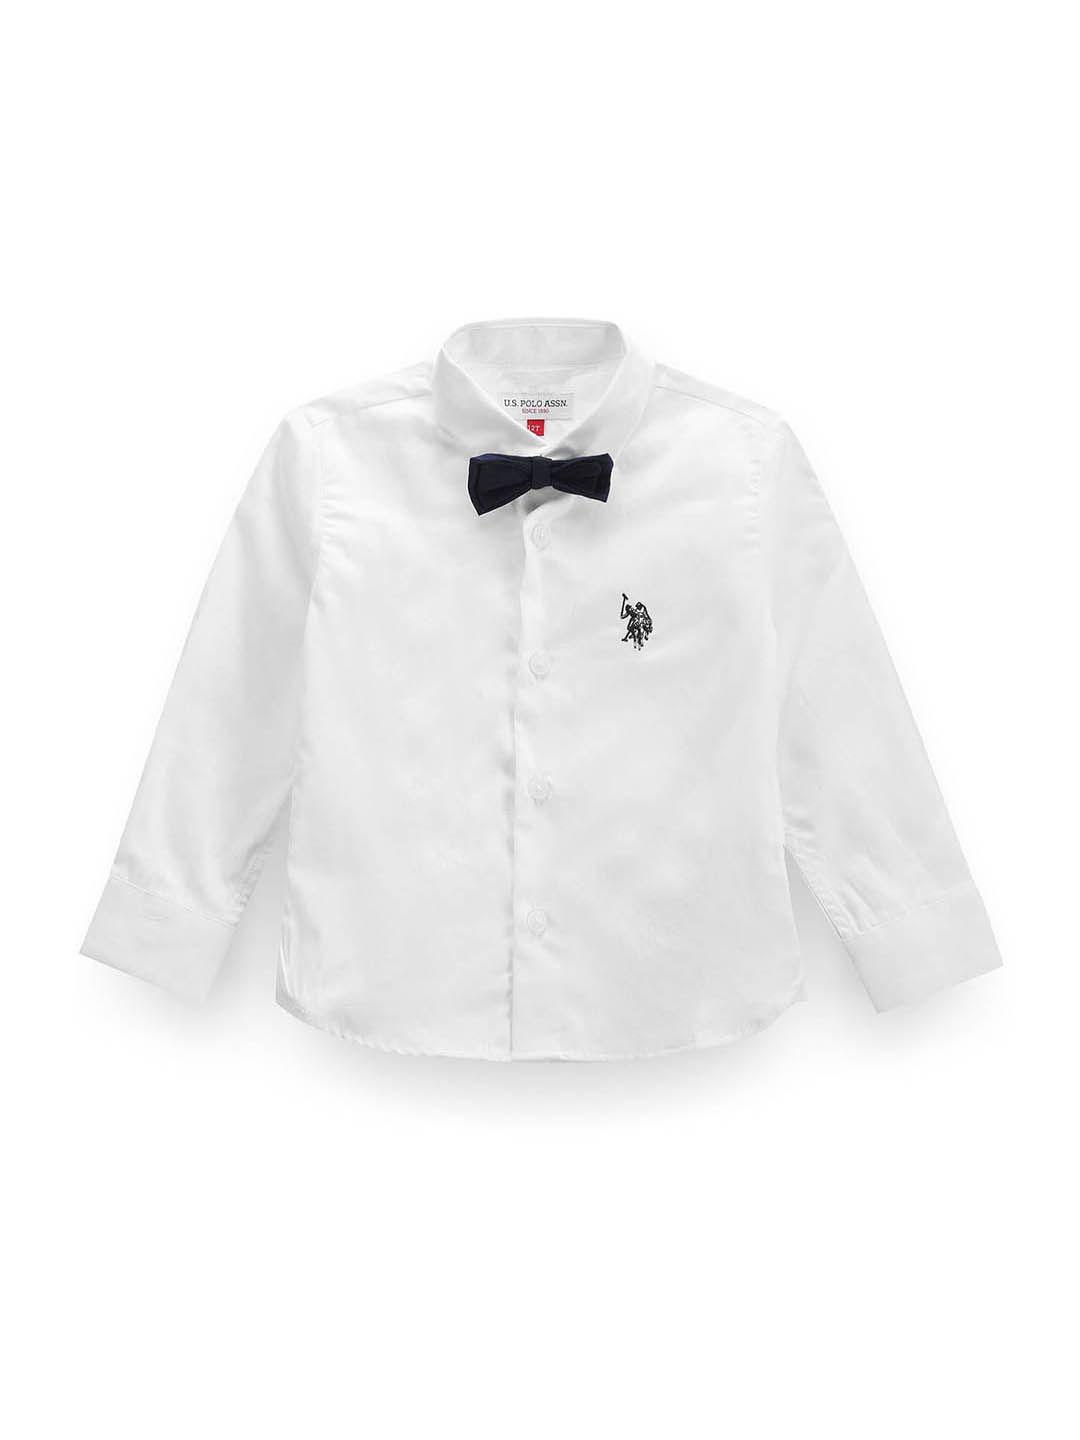 u.s.-polo-assn.-kids-boys-classic-spread-collar-pure-cotton-party-shirt